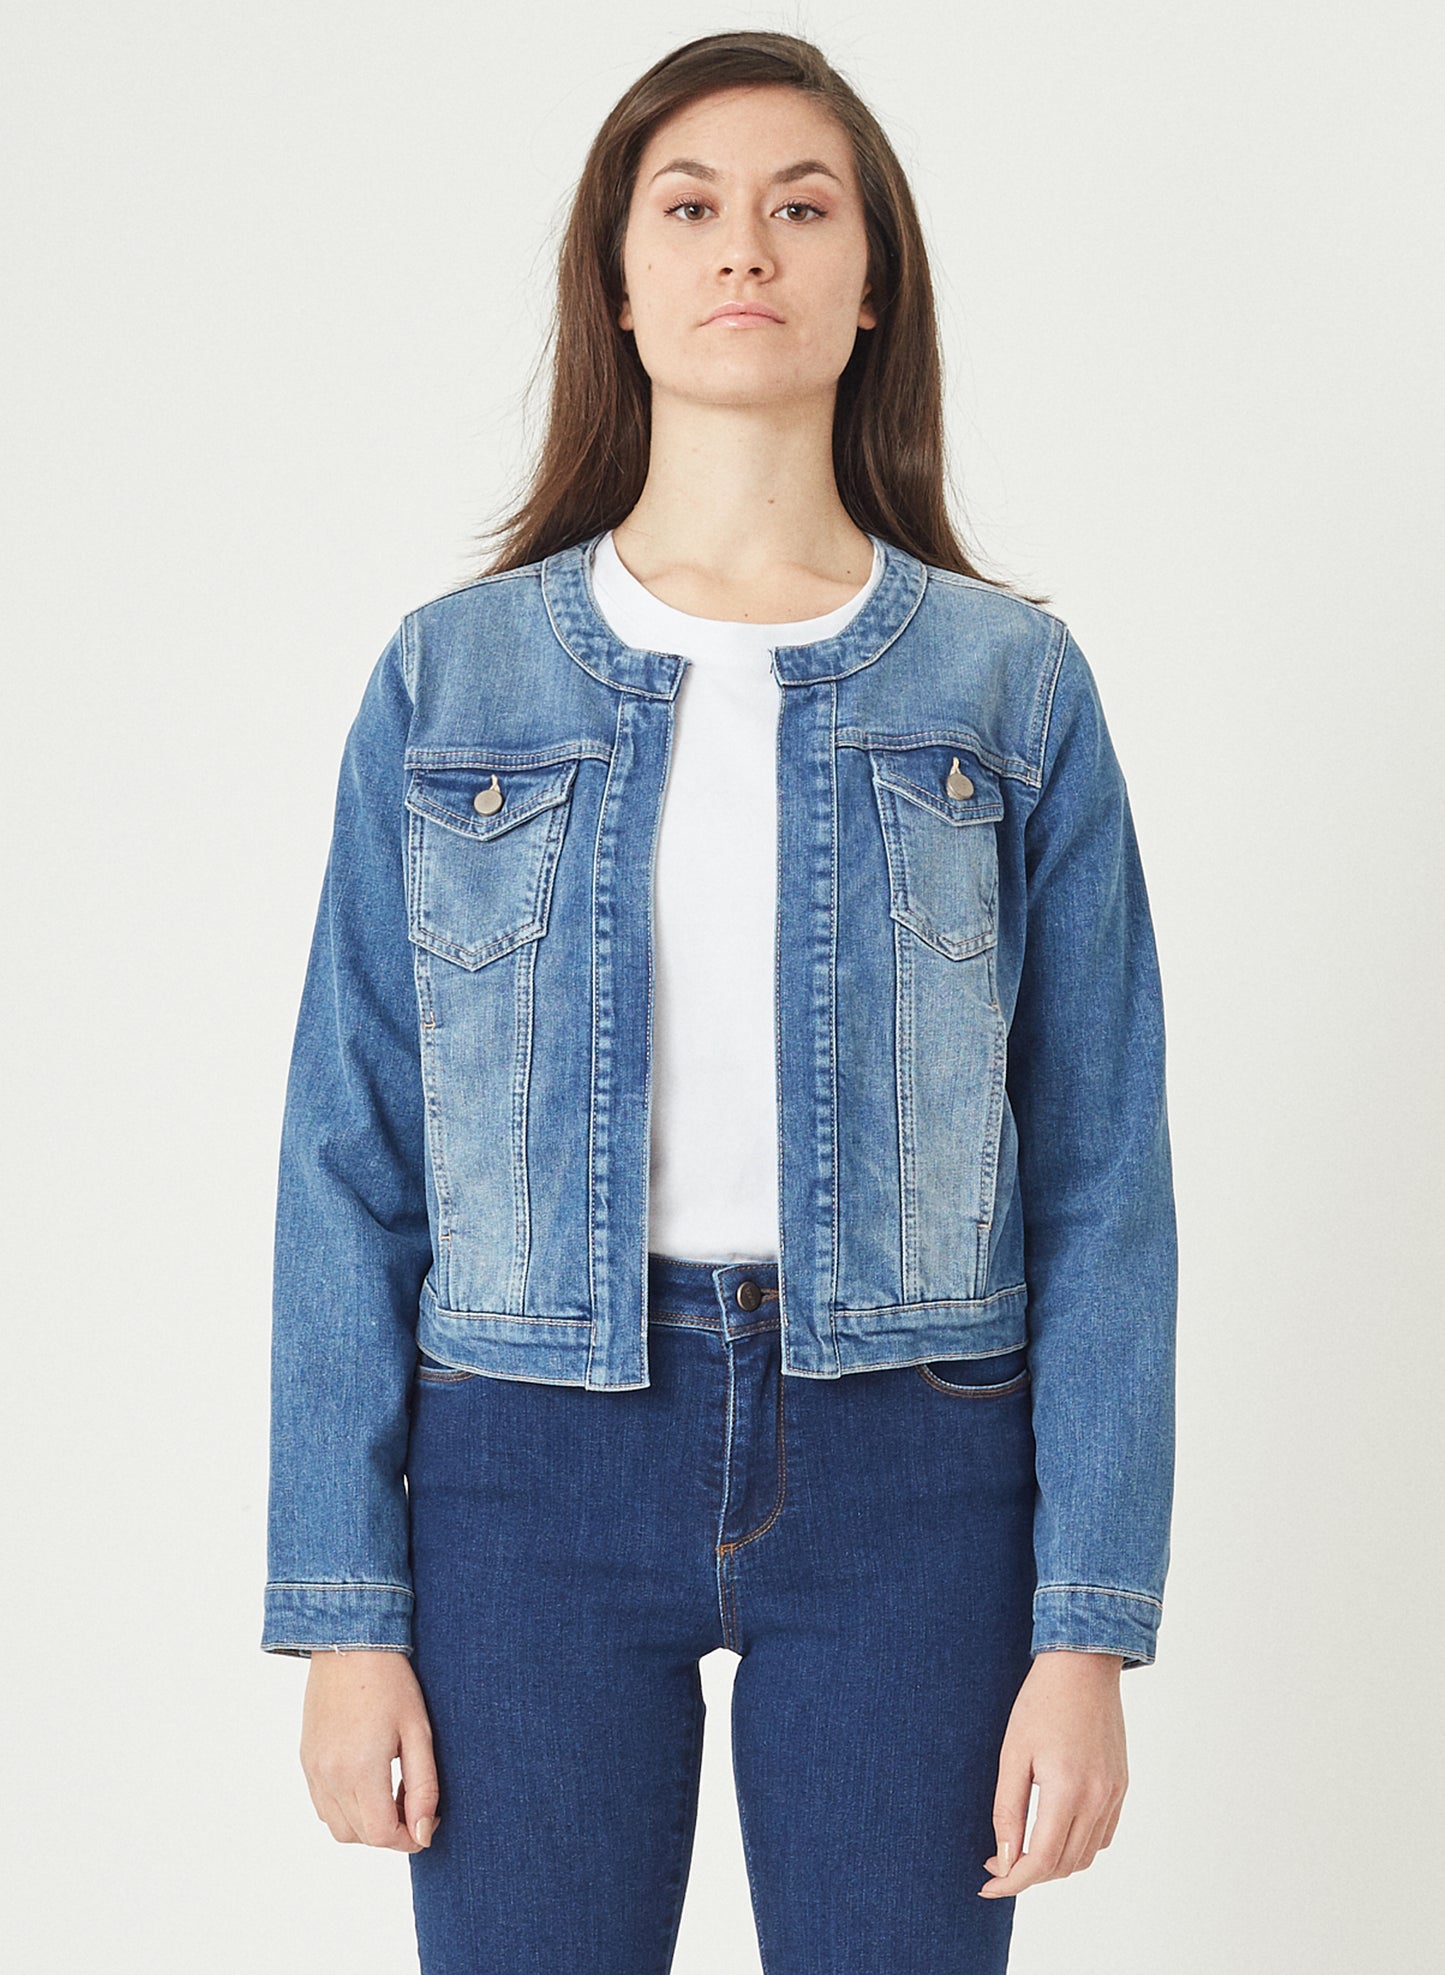 EVA - Bolero Denim Jeans Jacket - Light Blue